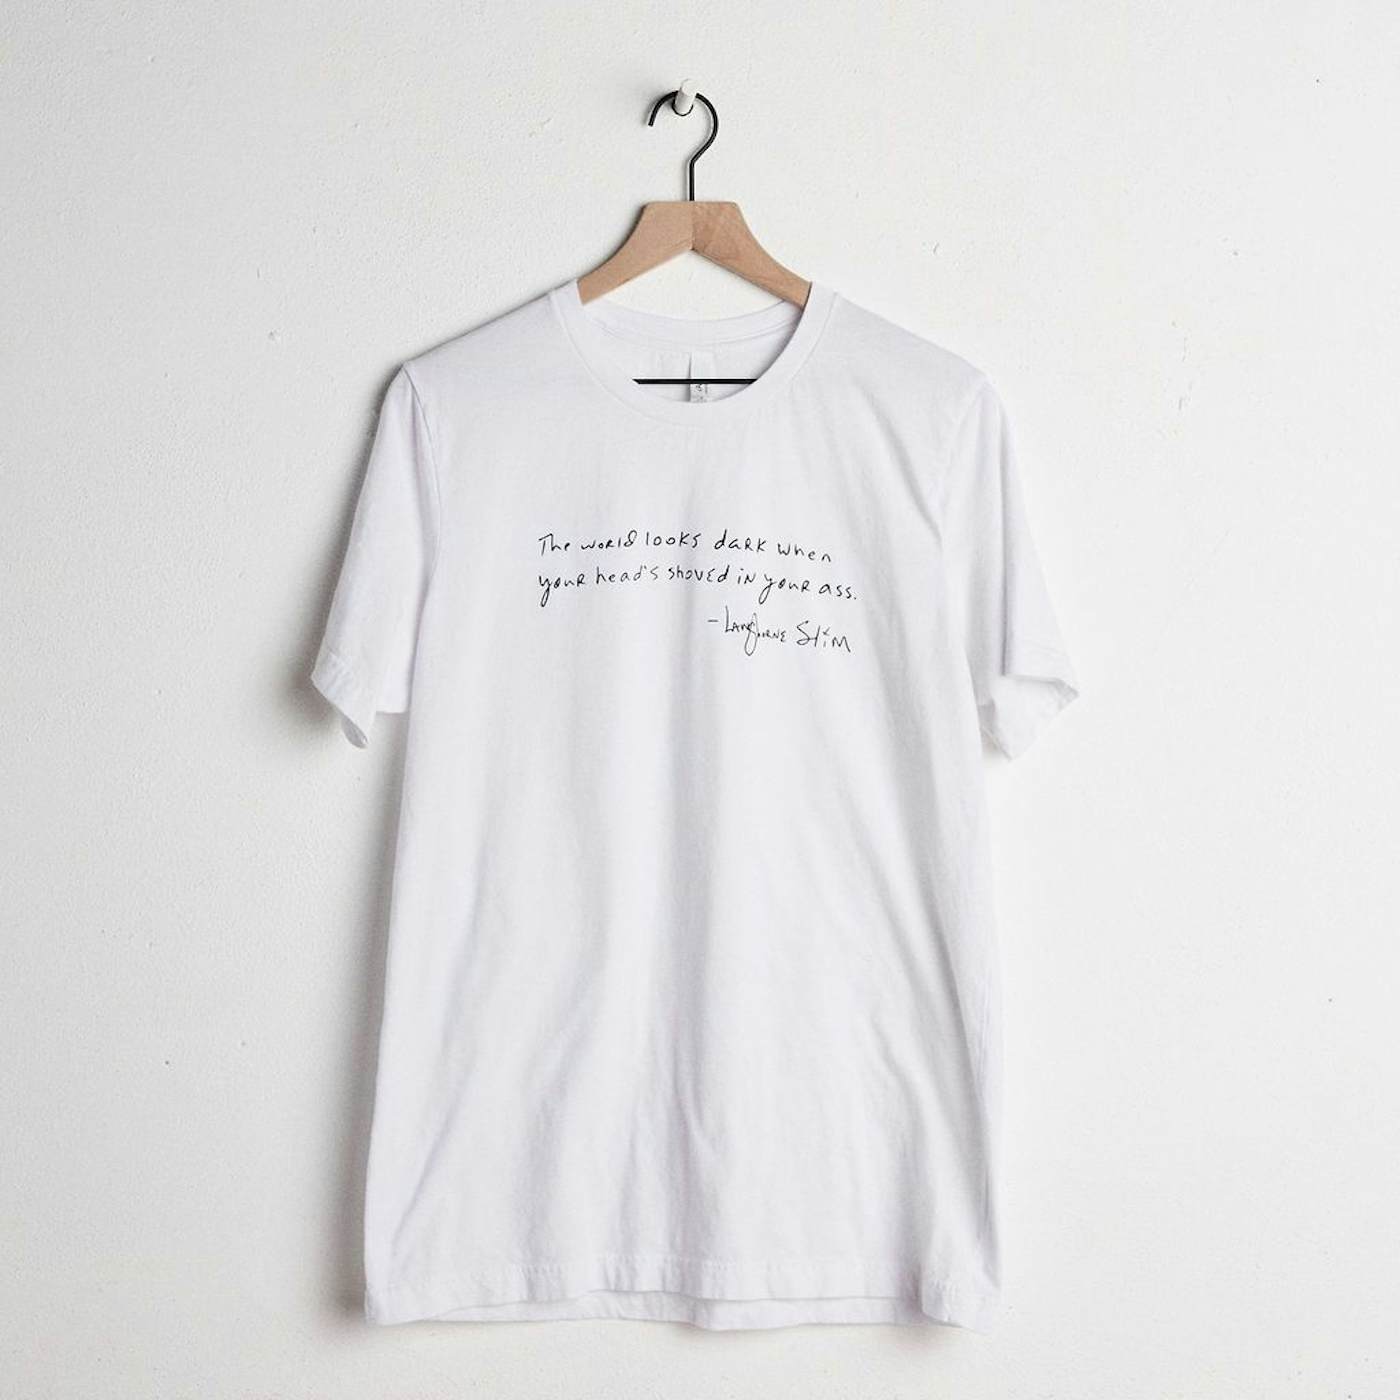 Langhorne Slim Strawberry Mansion (Shirt)